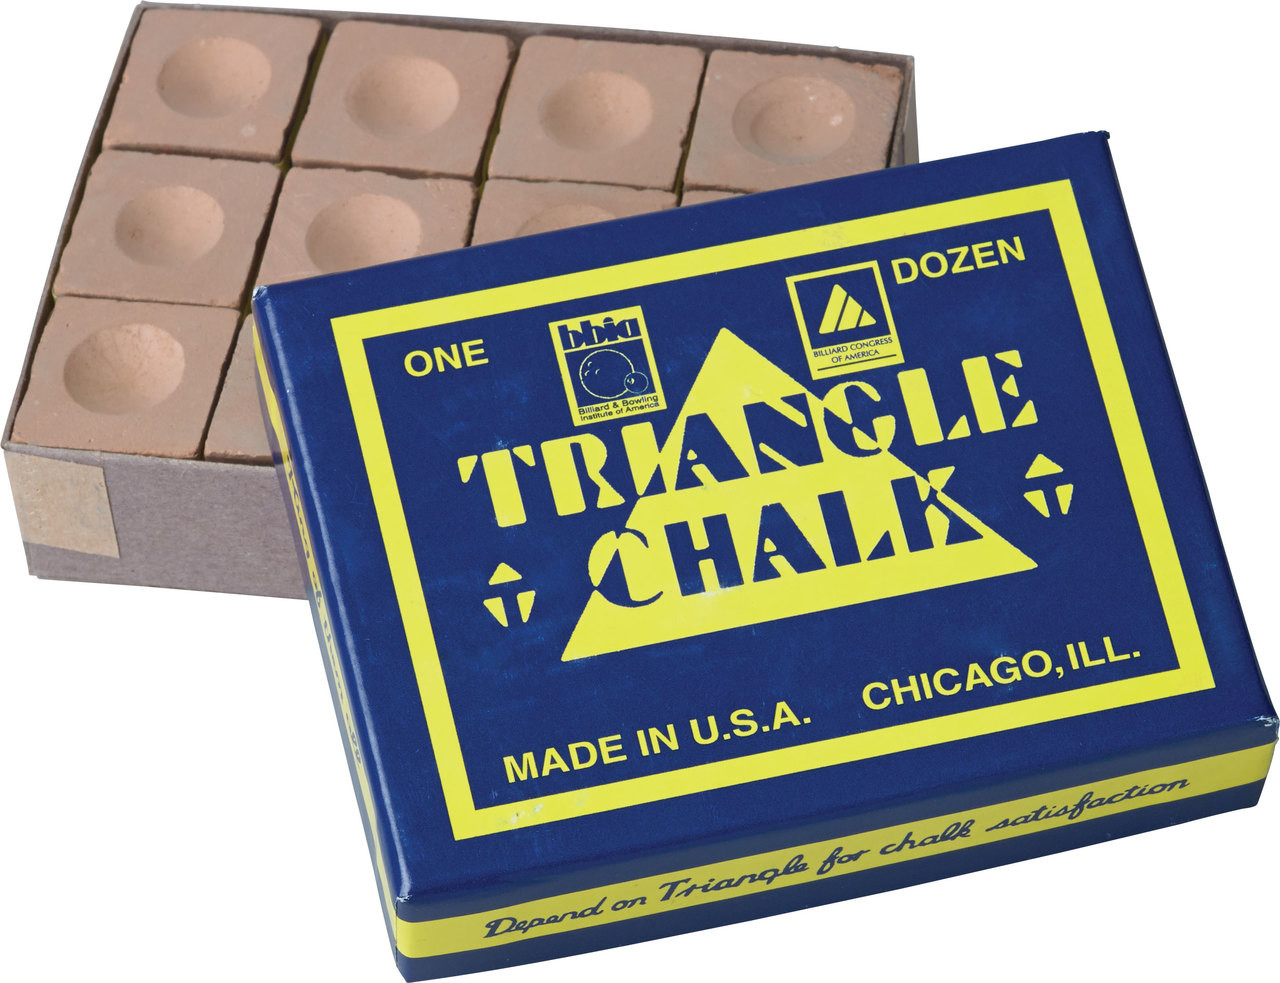 Triangle Chalk - Box of 12 - Gold